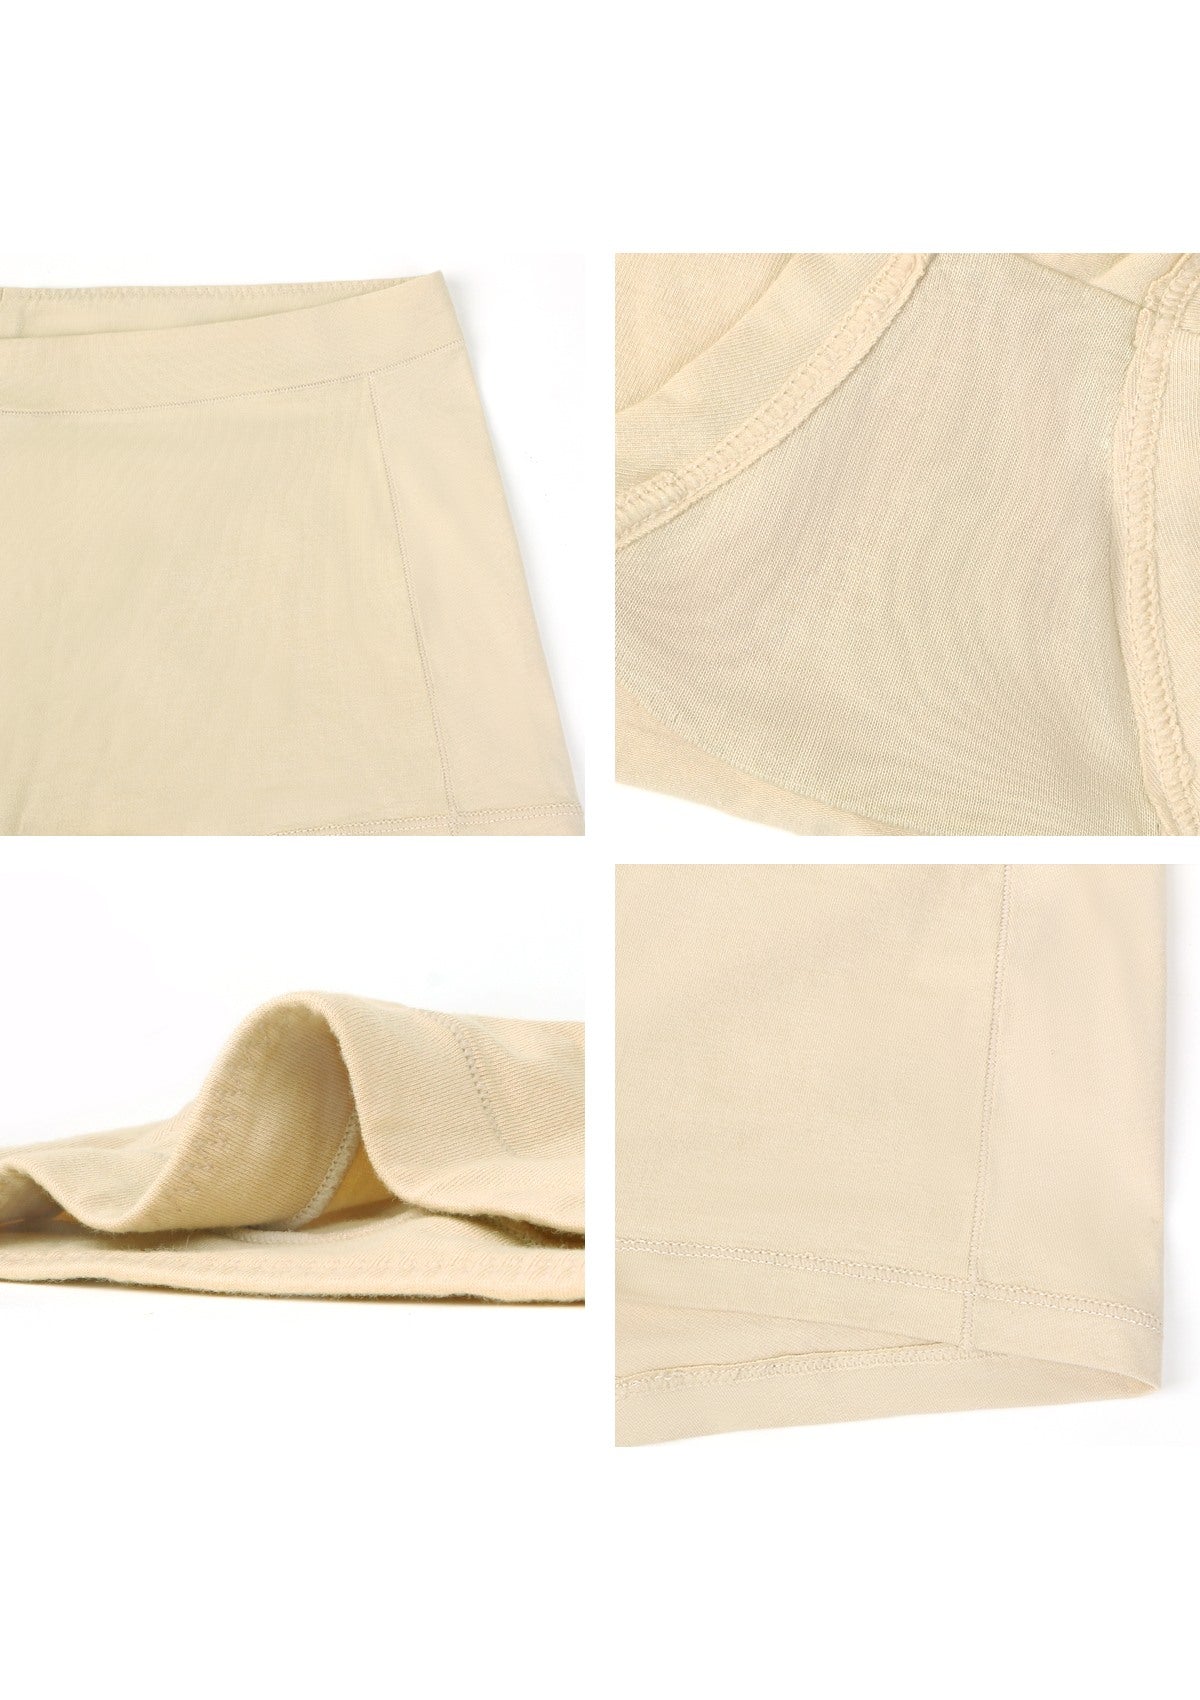 All-Day Comfort Mid-Rise Cotton Boyshorts Underwear 3 Pack - M / Black+White+Beige